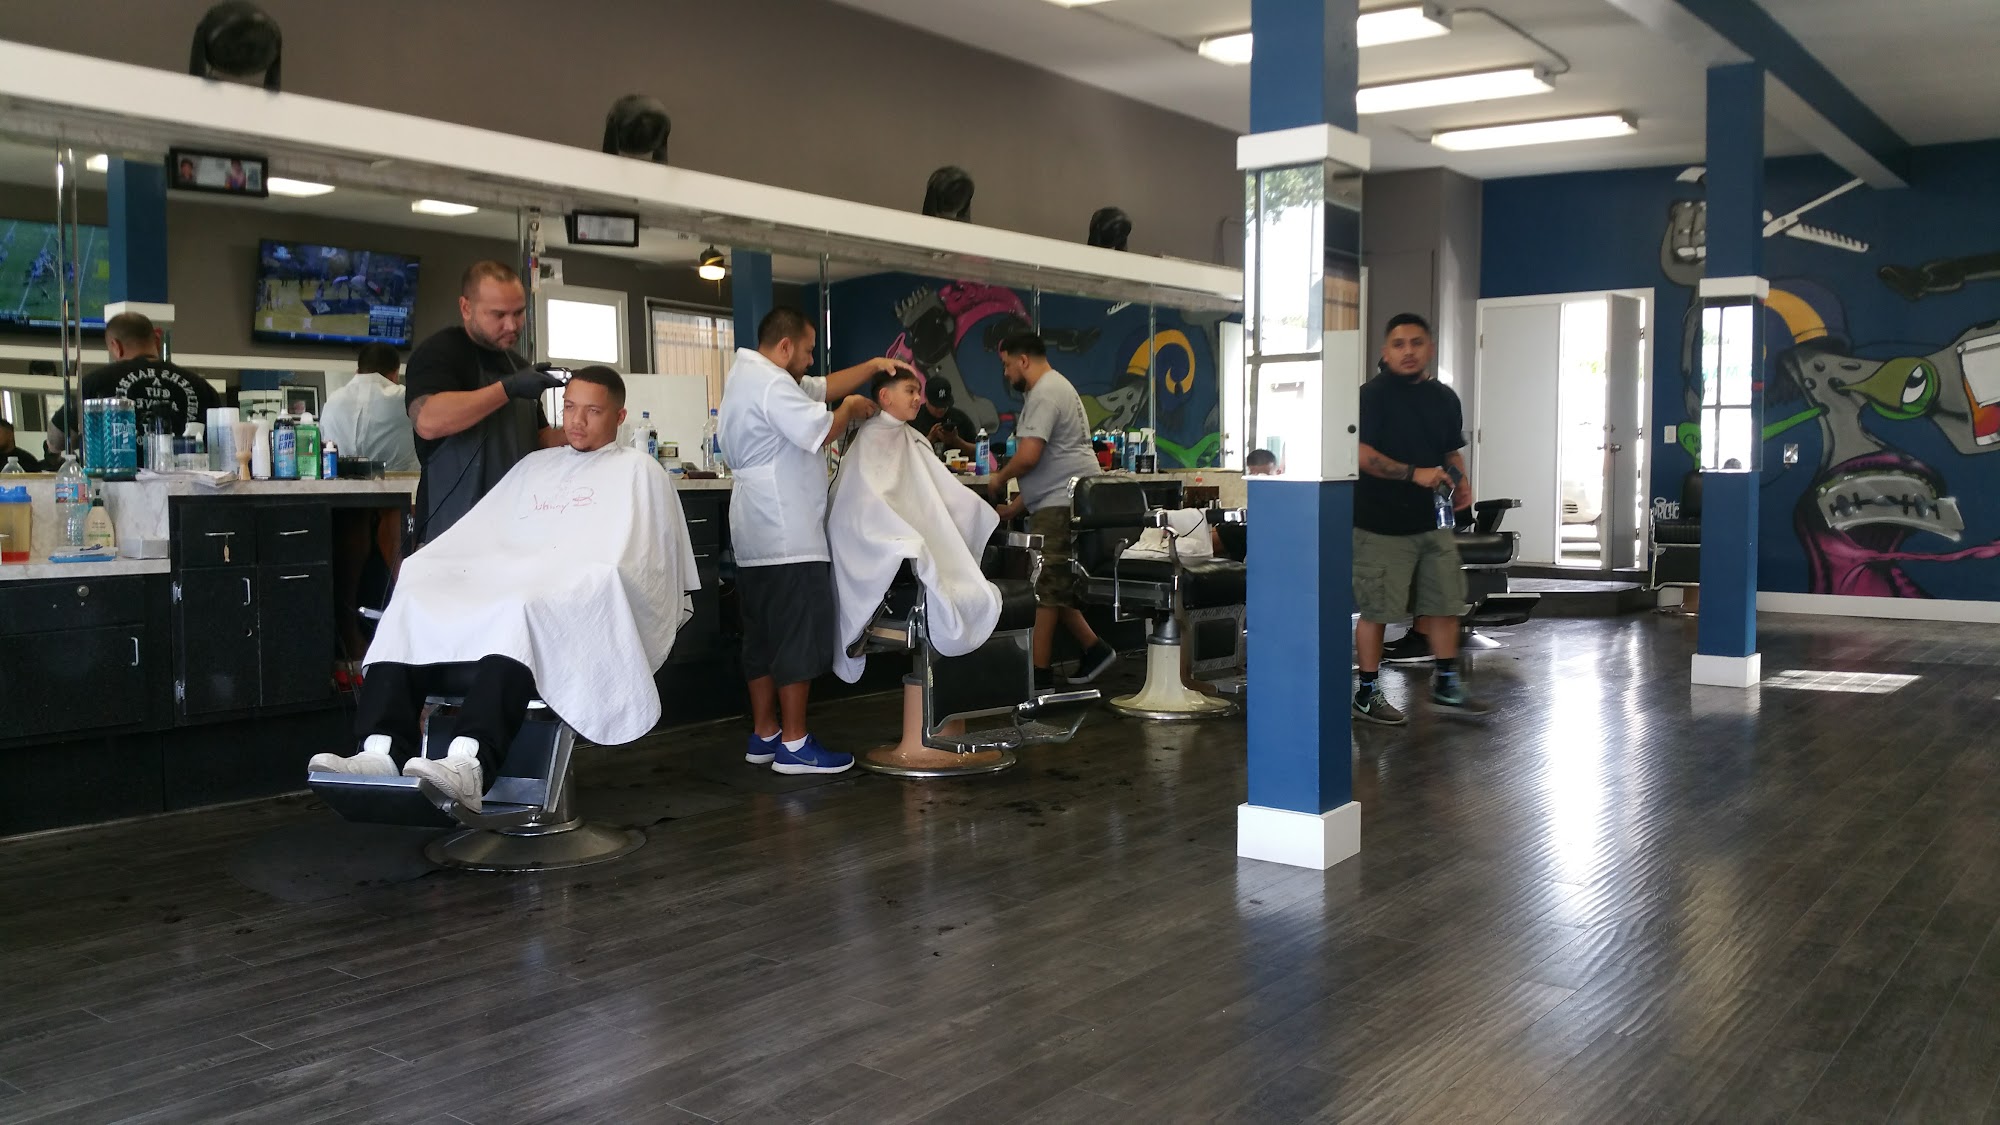 Headliners Barbershop